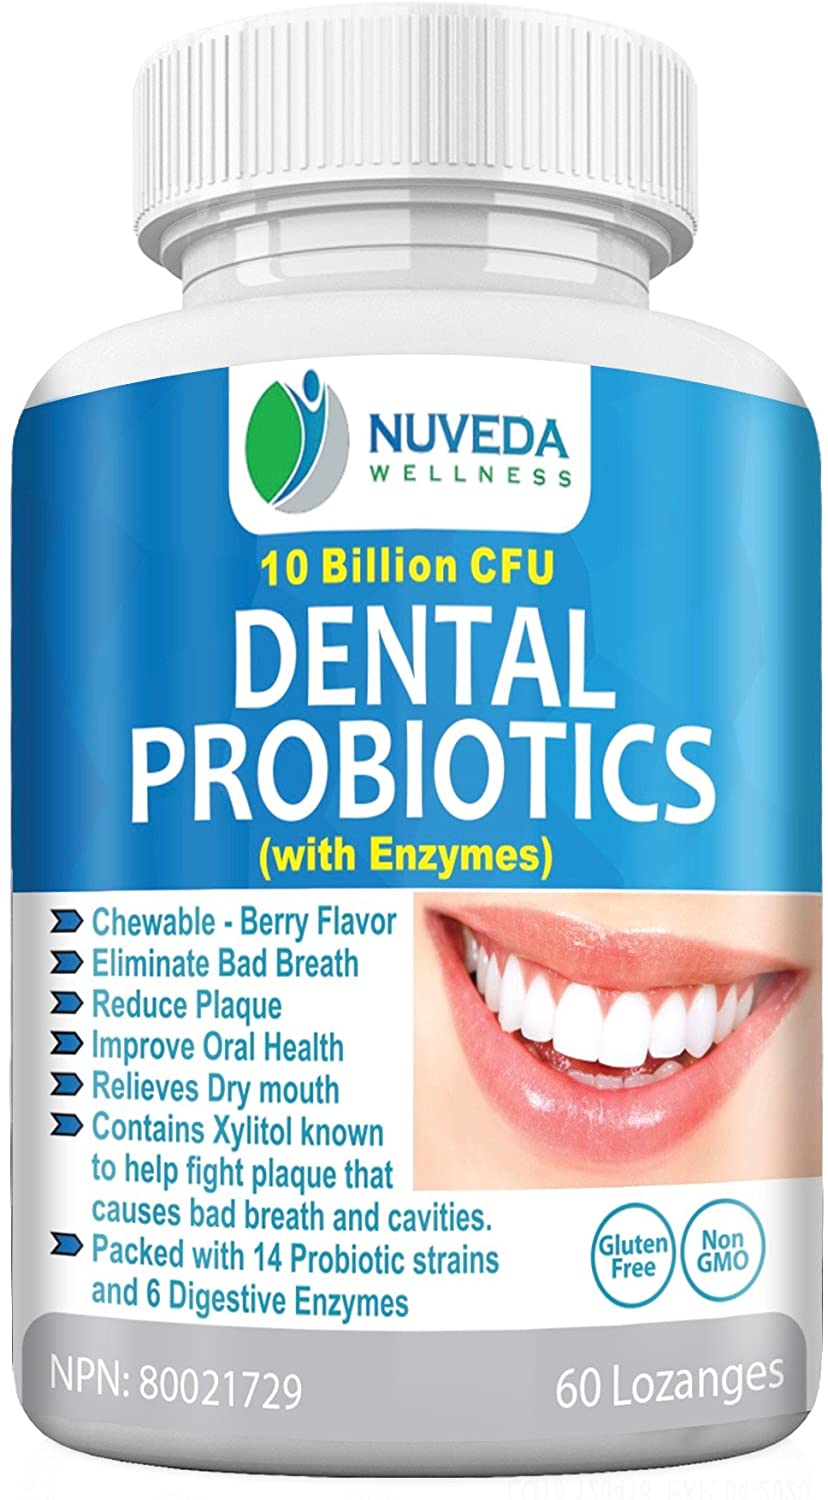 Nuveda Wellness Dental Probiotic 60